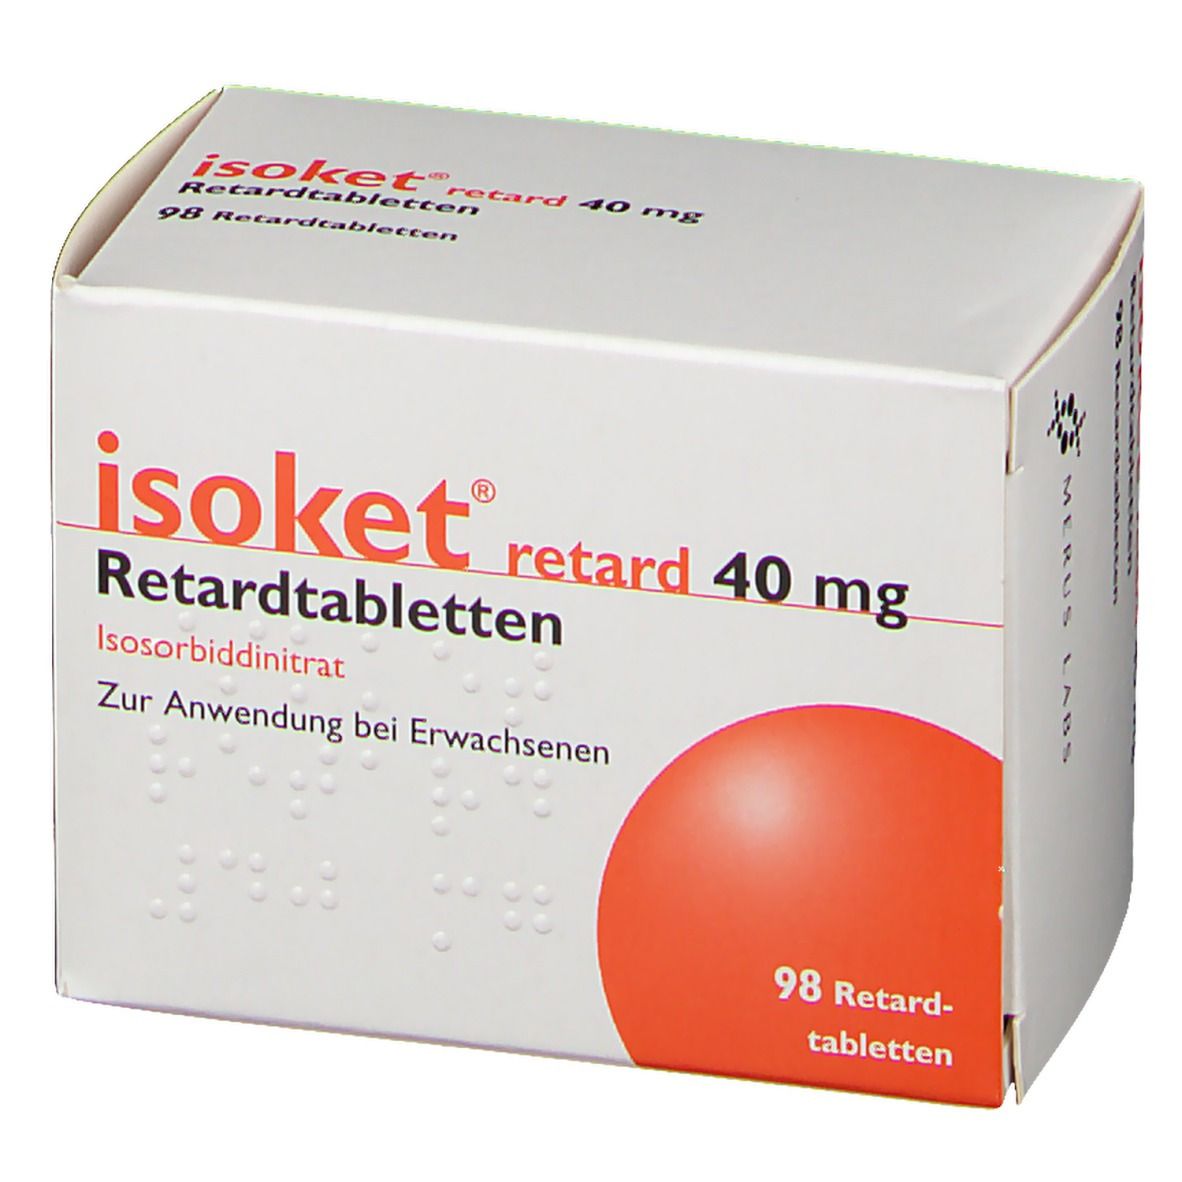 isoket® retard 40 mg